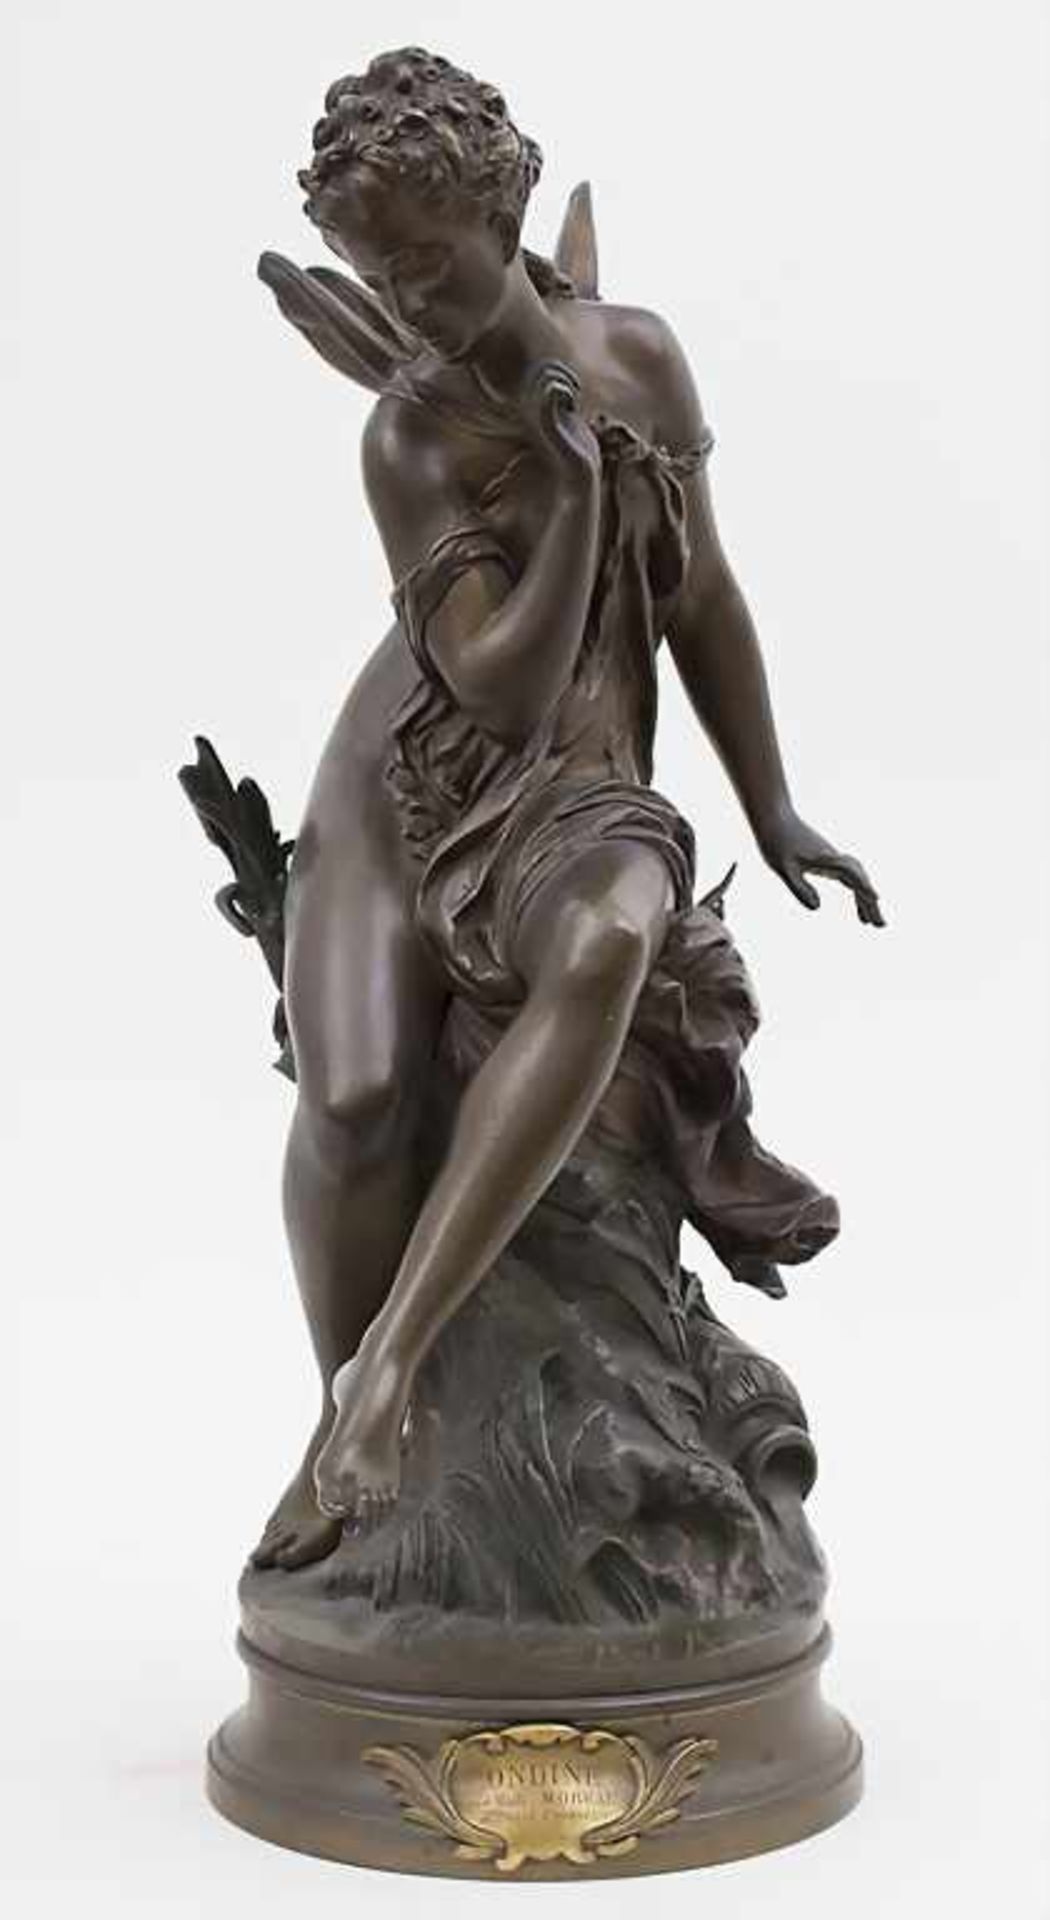 Mathurin Moreau (1822-1912), 'Ondine' Technik: Bronze, patiniert, auf Rundsockel montiert, Signatur: